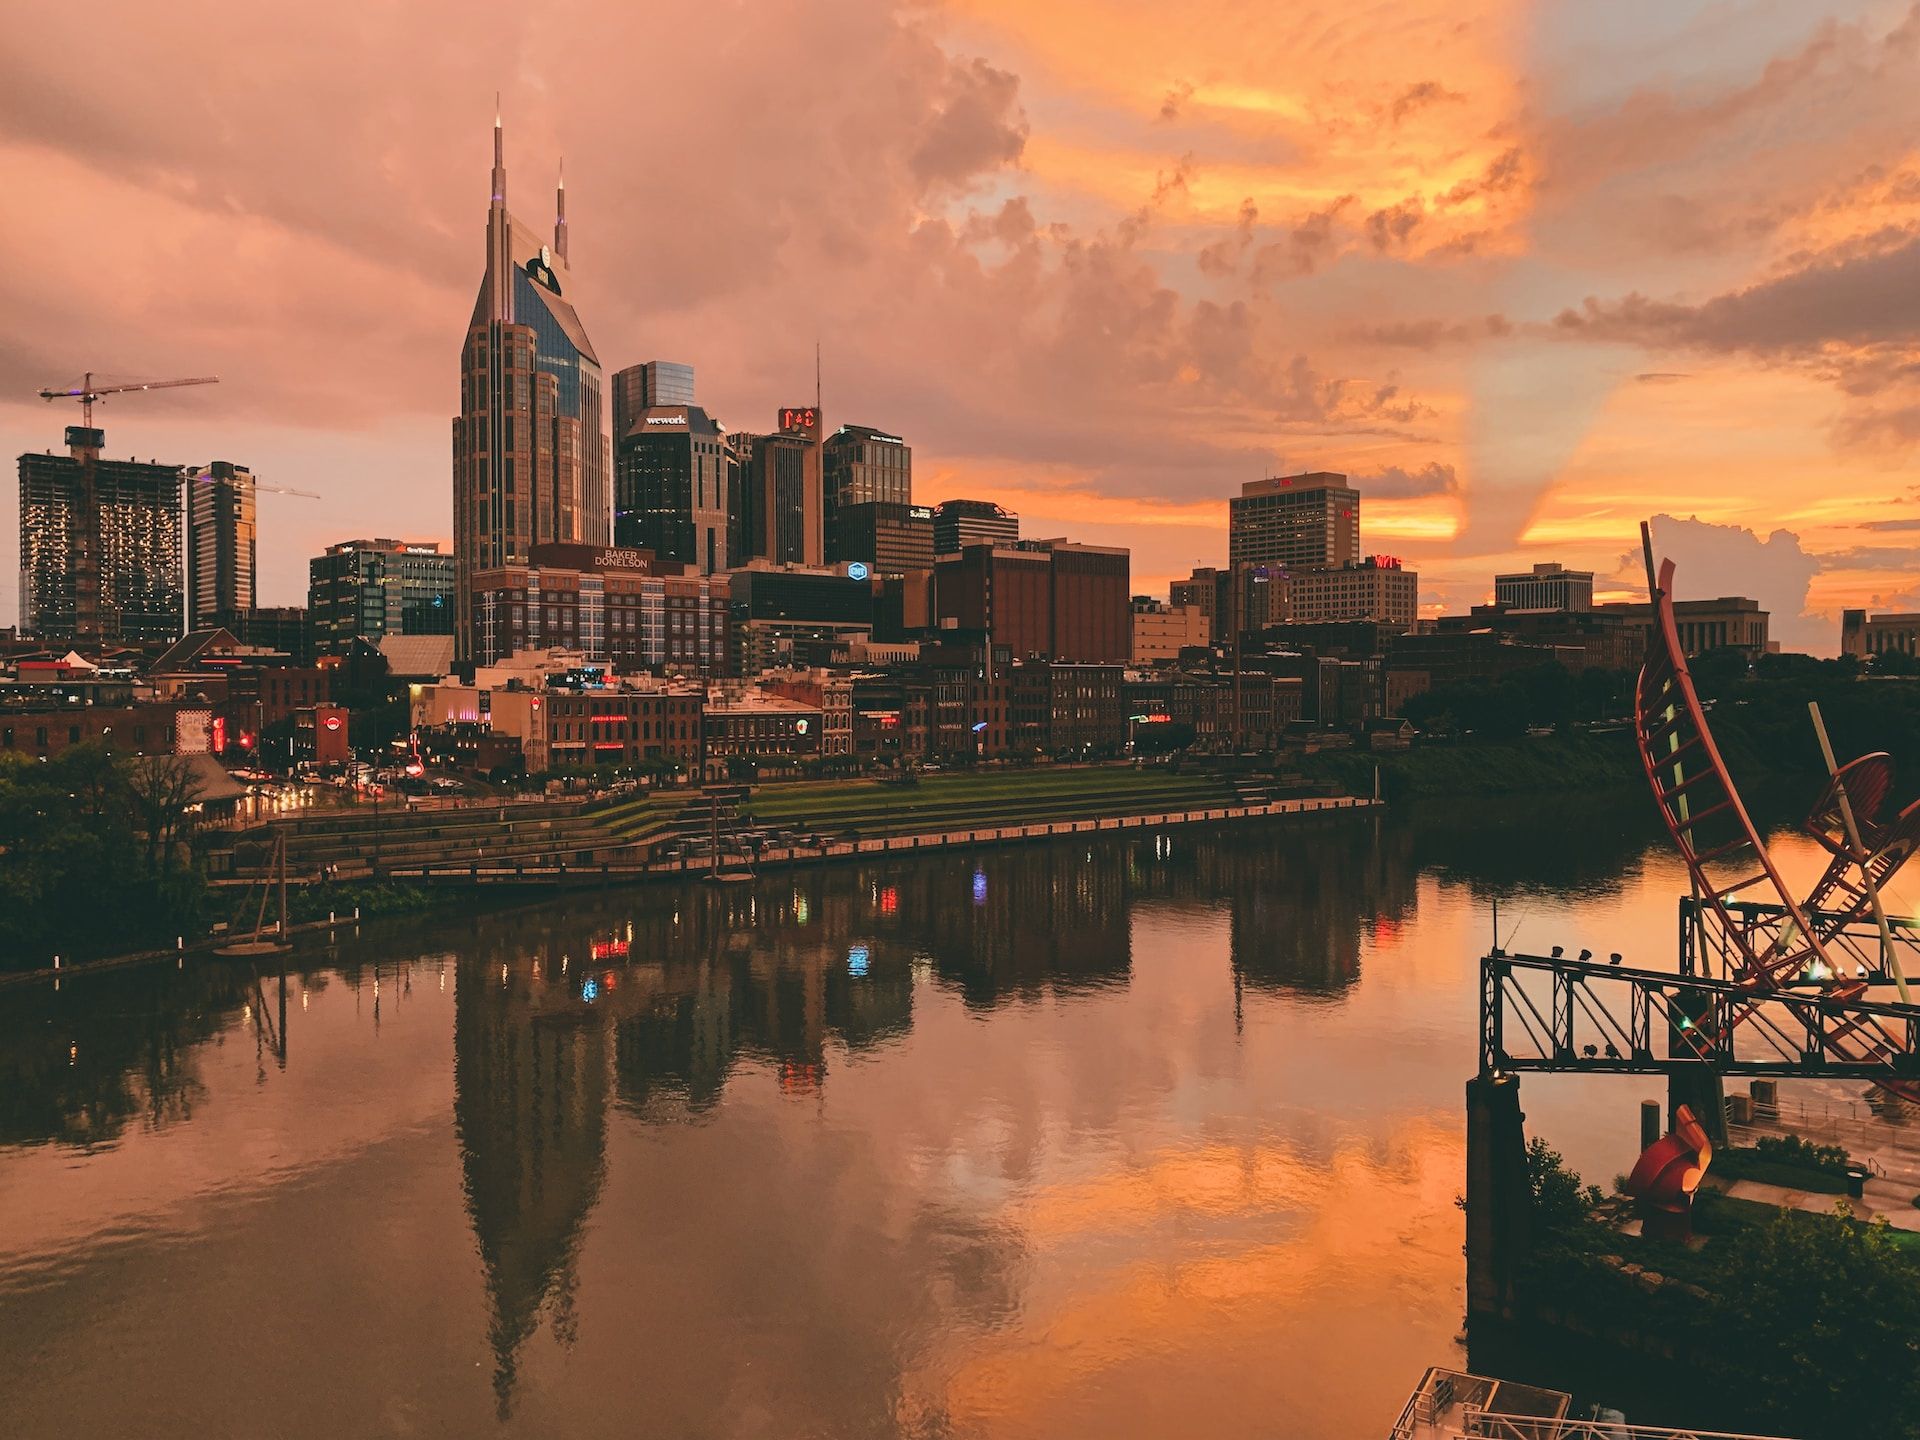 Orange skies over Nashville, Tennessee